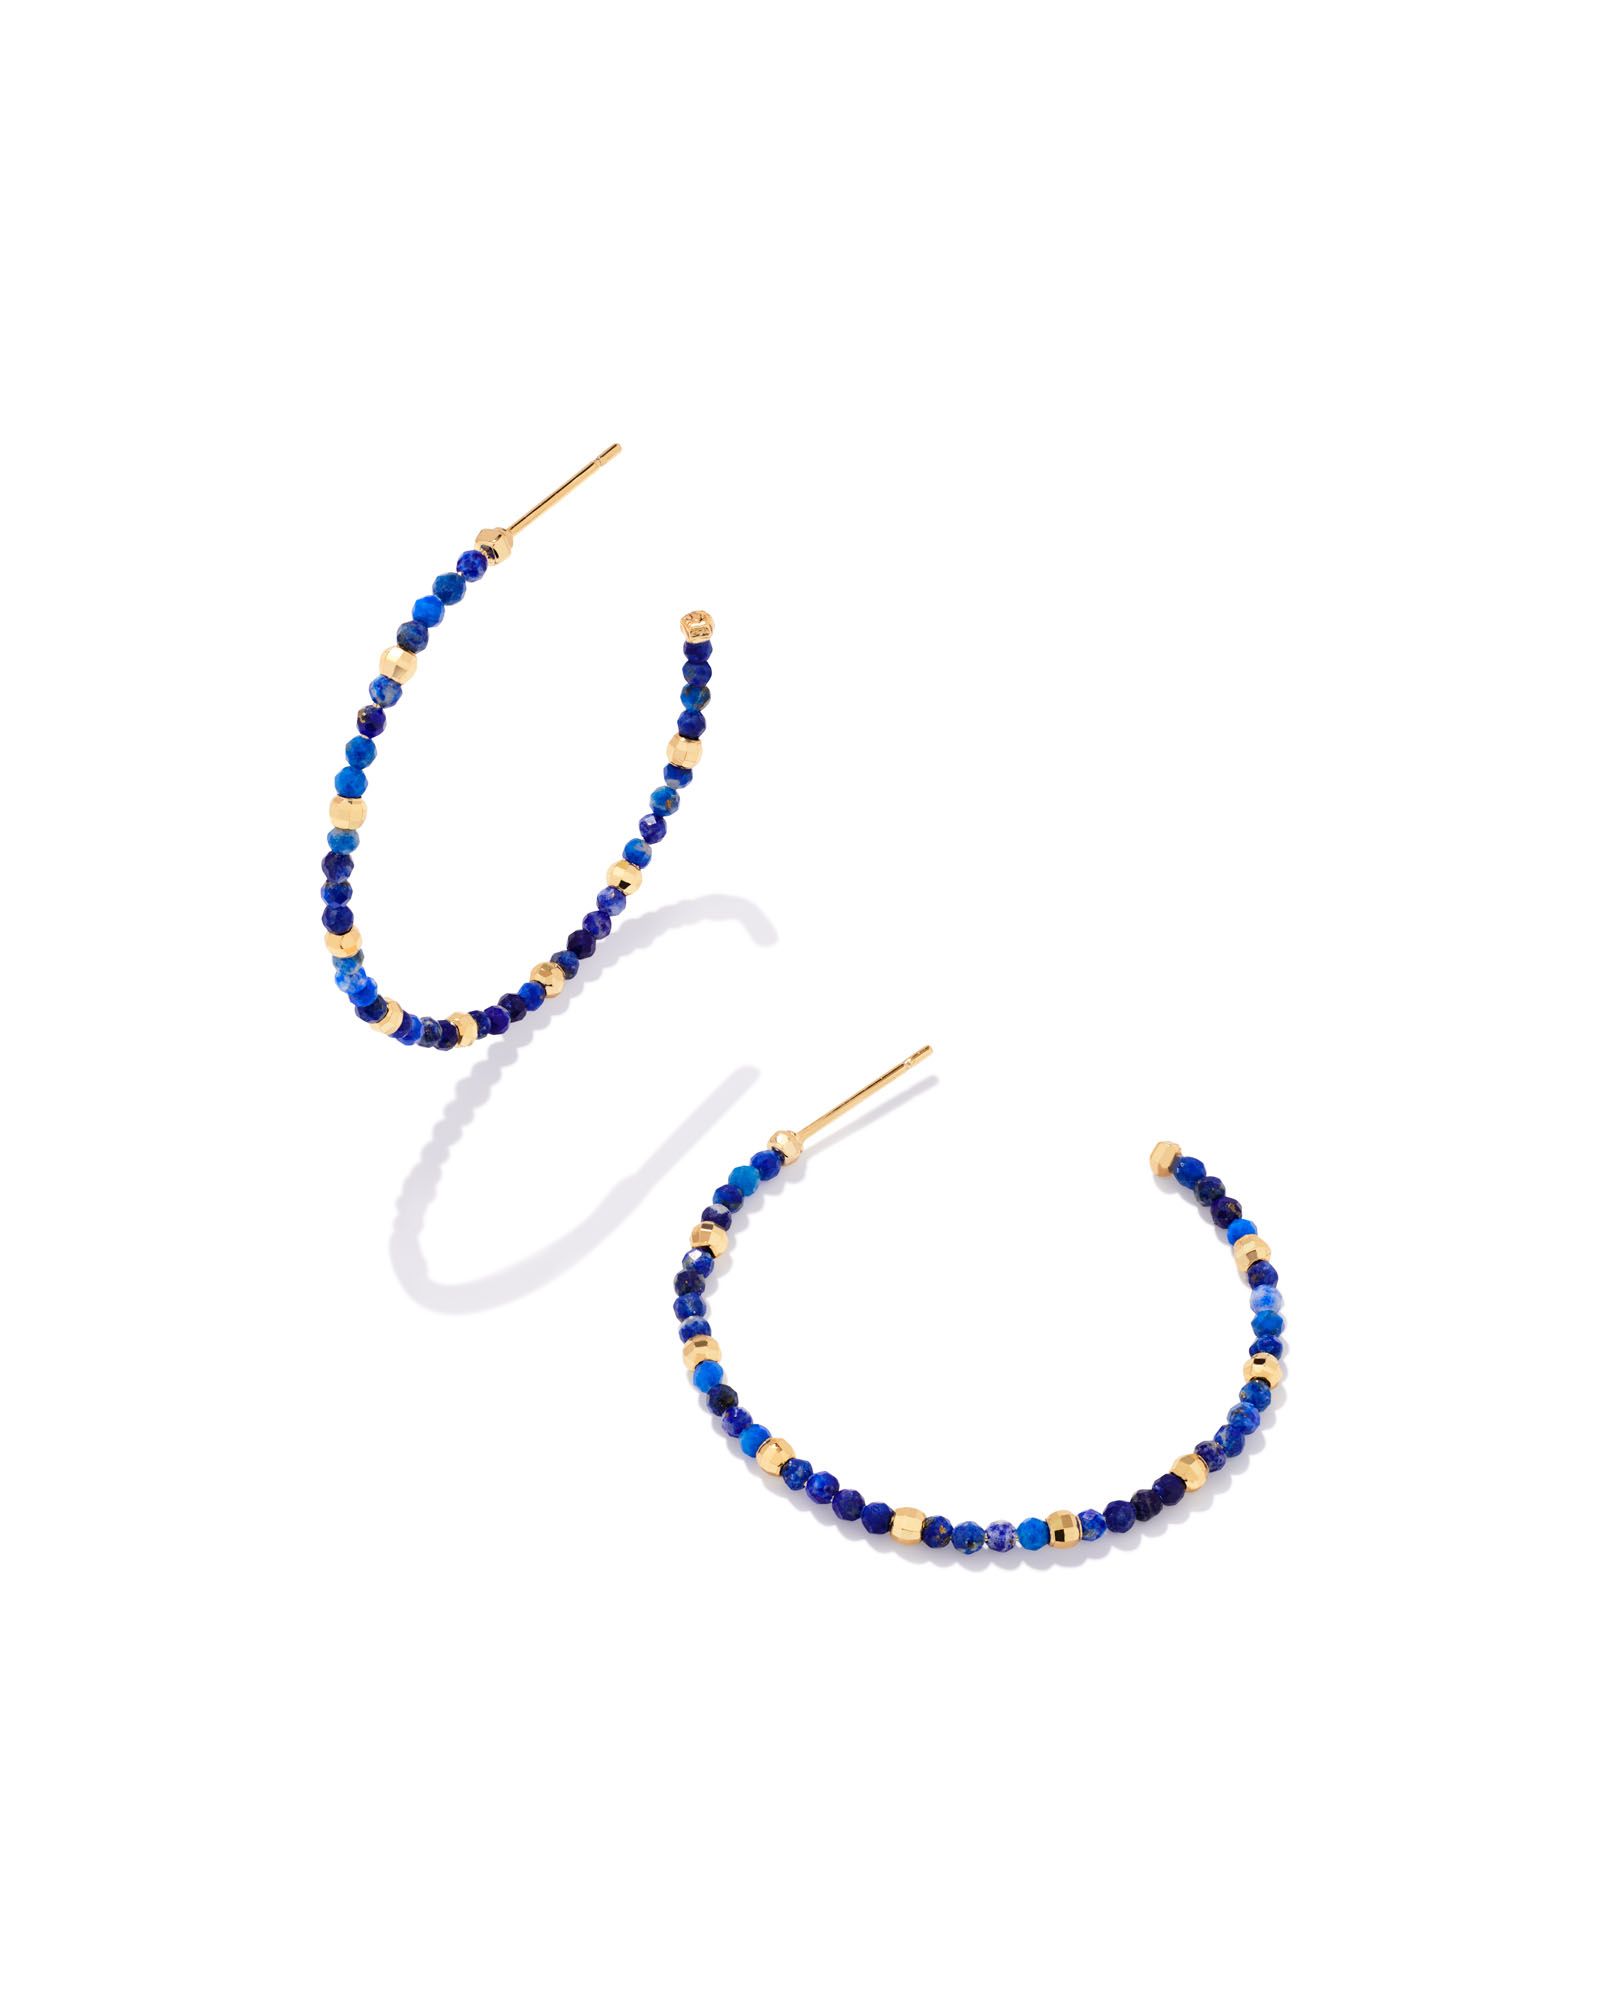 Britt Gold Thin Beaded Hoop Earrings in Blue Lapis | Kendra Scott | Kendra Scott